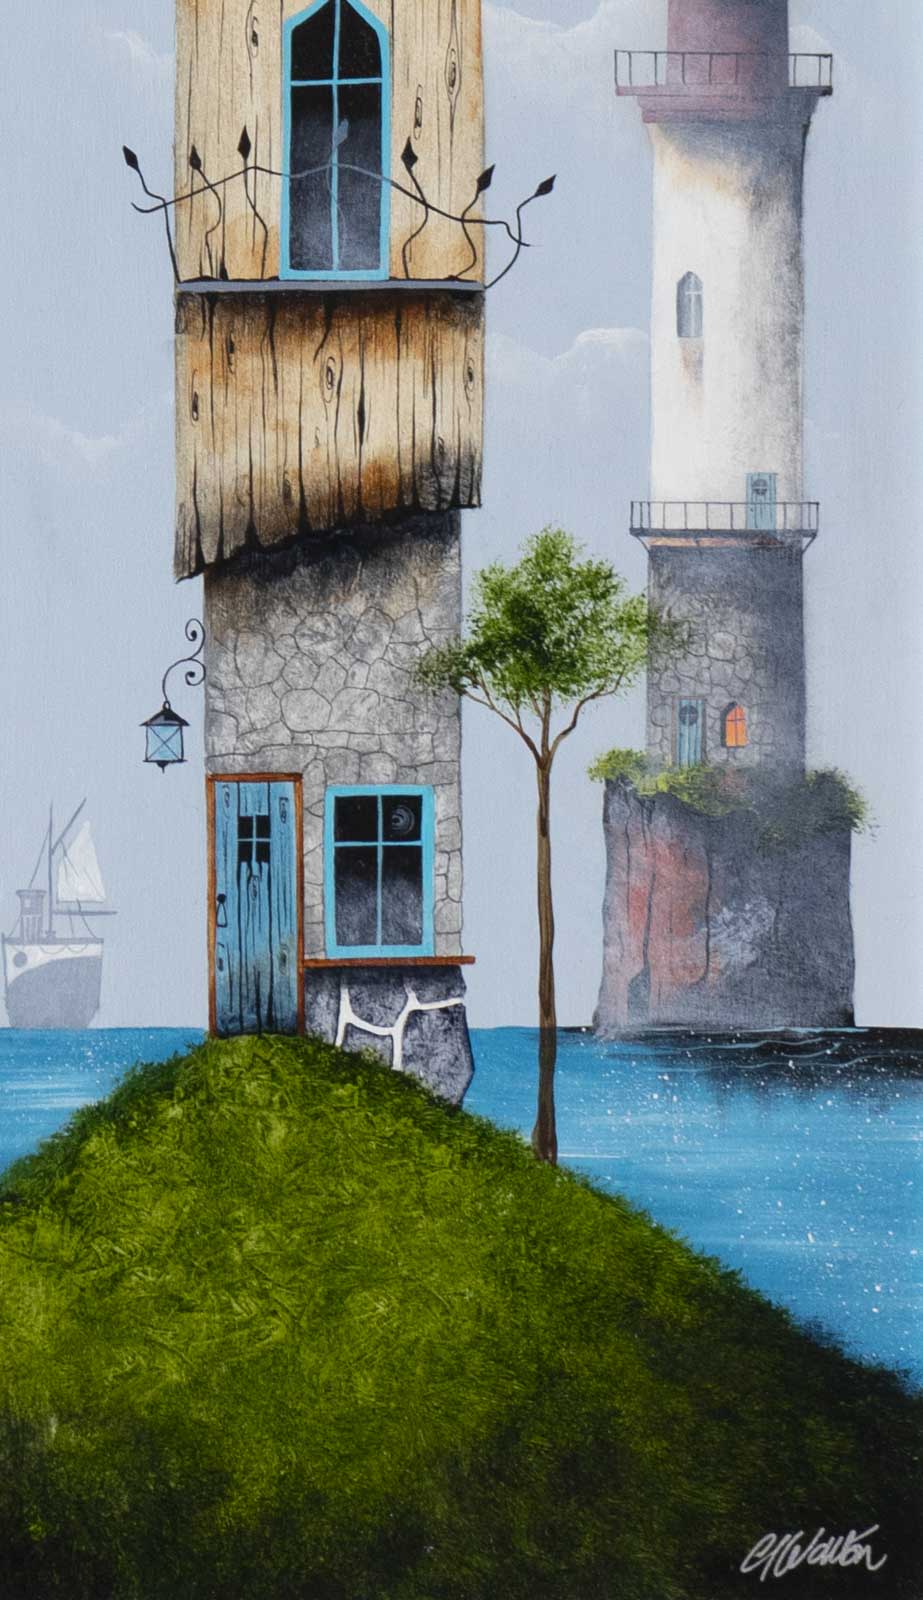 The Lighthouse II